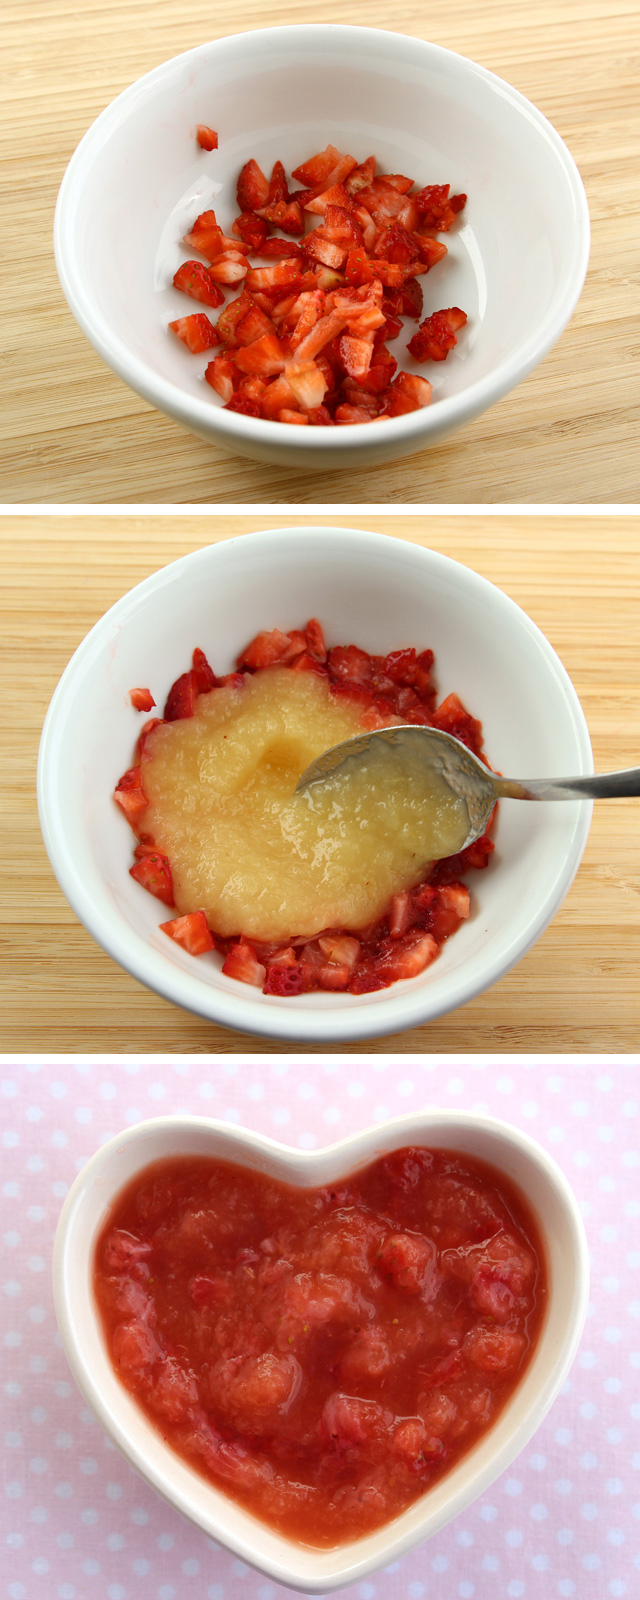 Homemade strawberry applesauce: 3 healthy Valentine snack ideas - yumm!